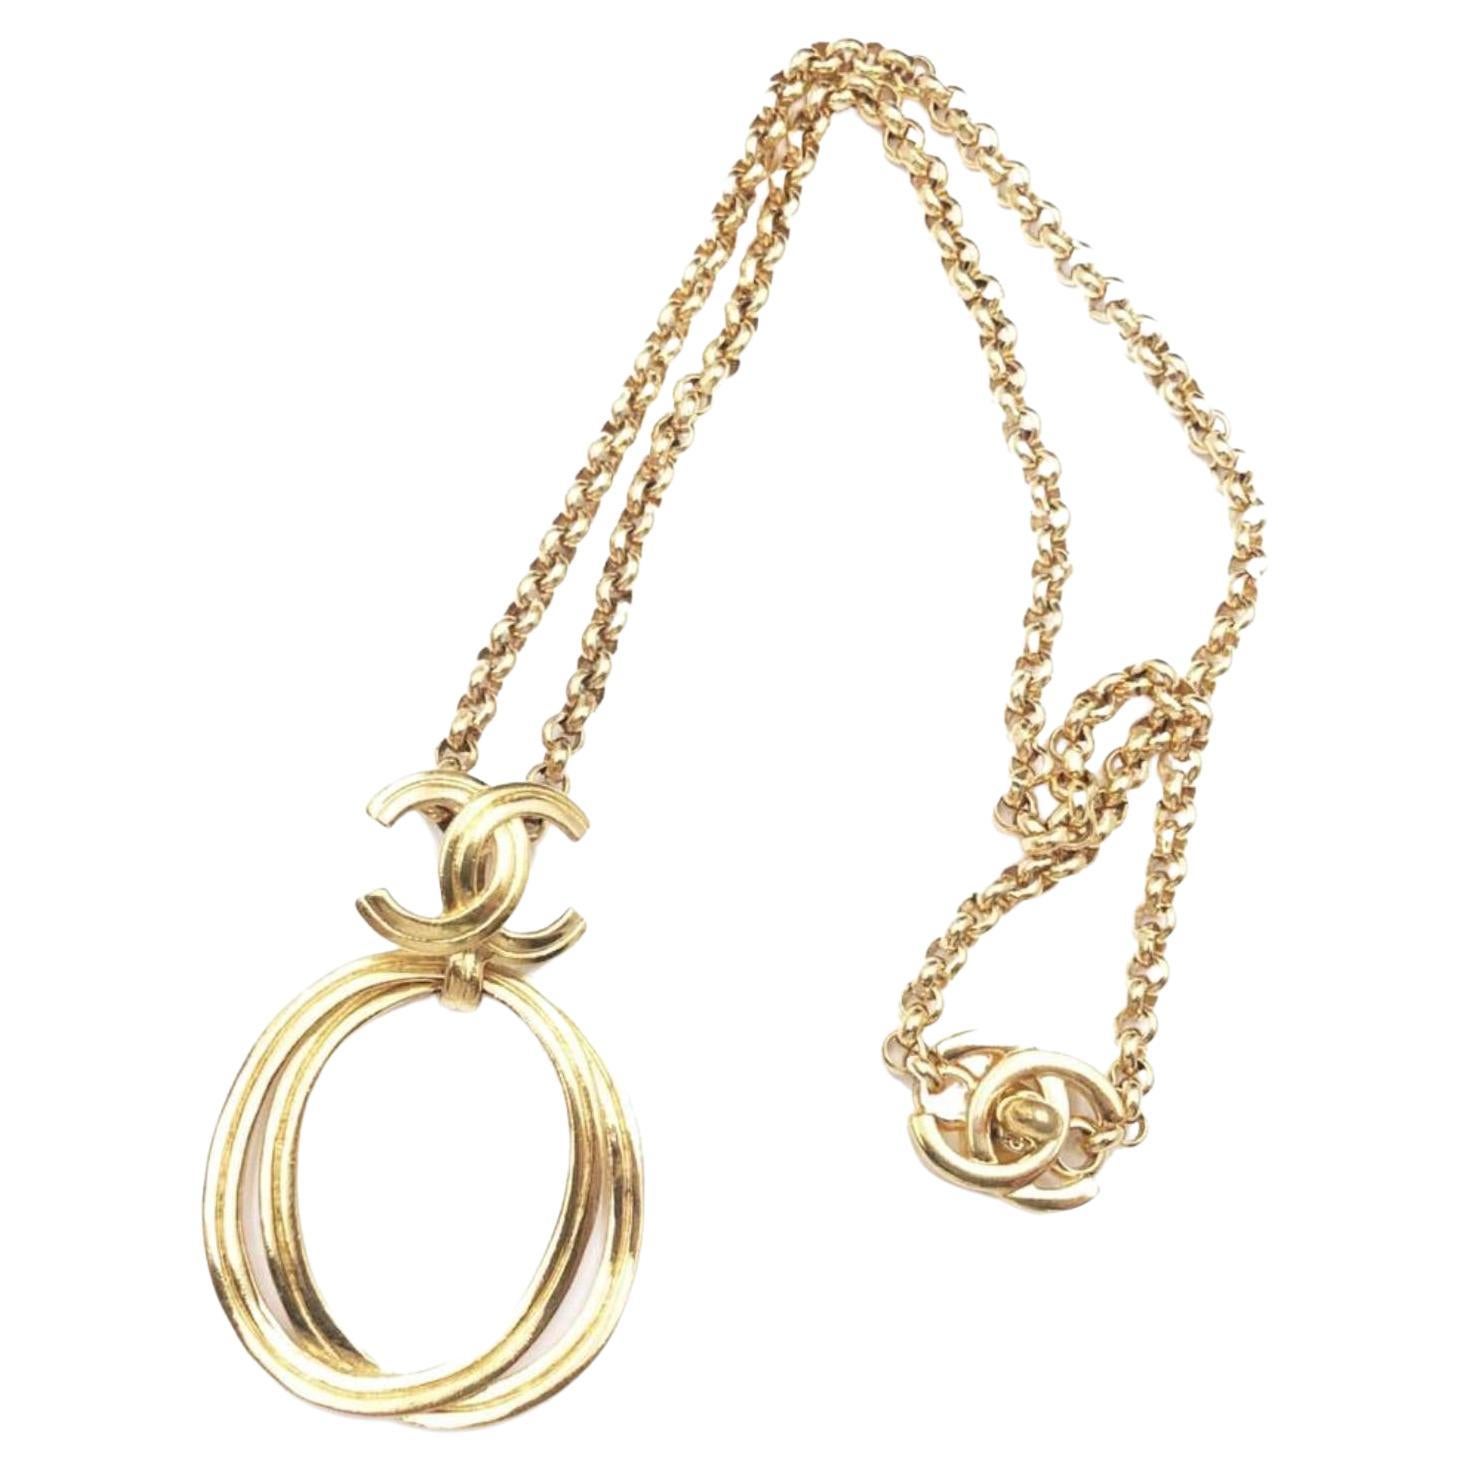 Chanel Vintage Seltene vergoldete CC Ring-Halskette mit Turnlock-Ring, Vintage